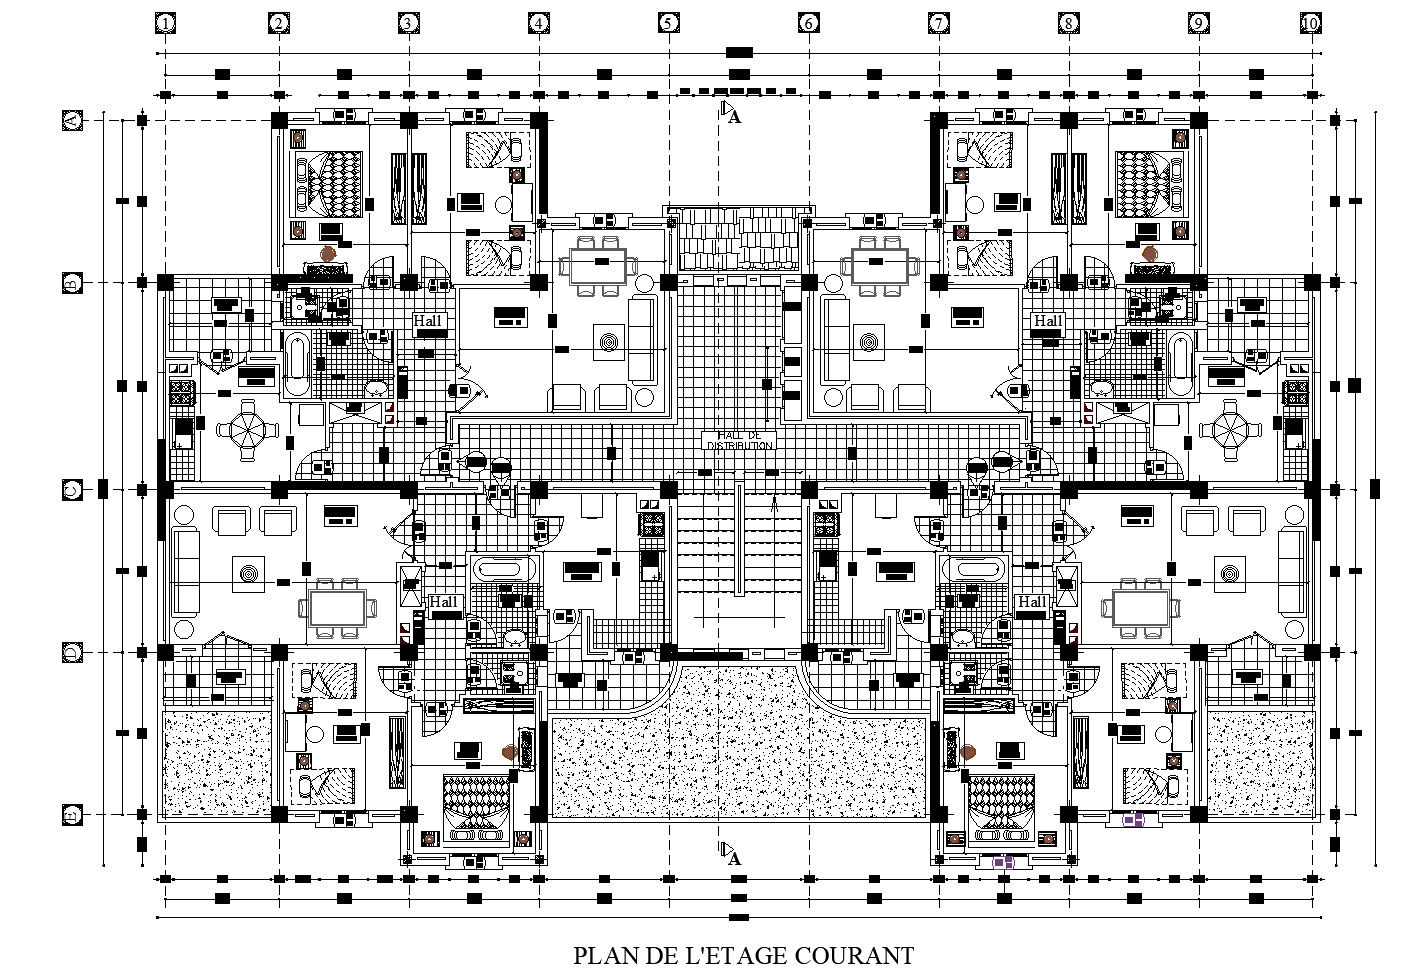 Detailing of apartment tower plan detail dwg file. - Cadbull